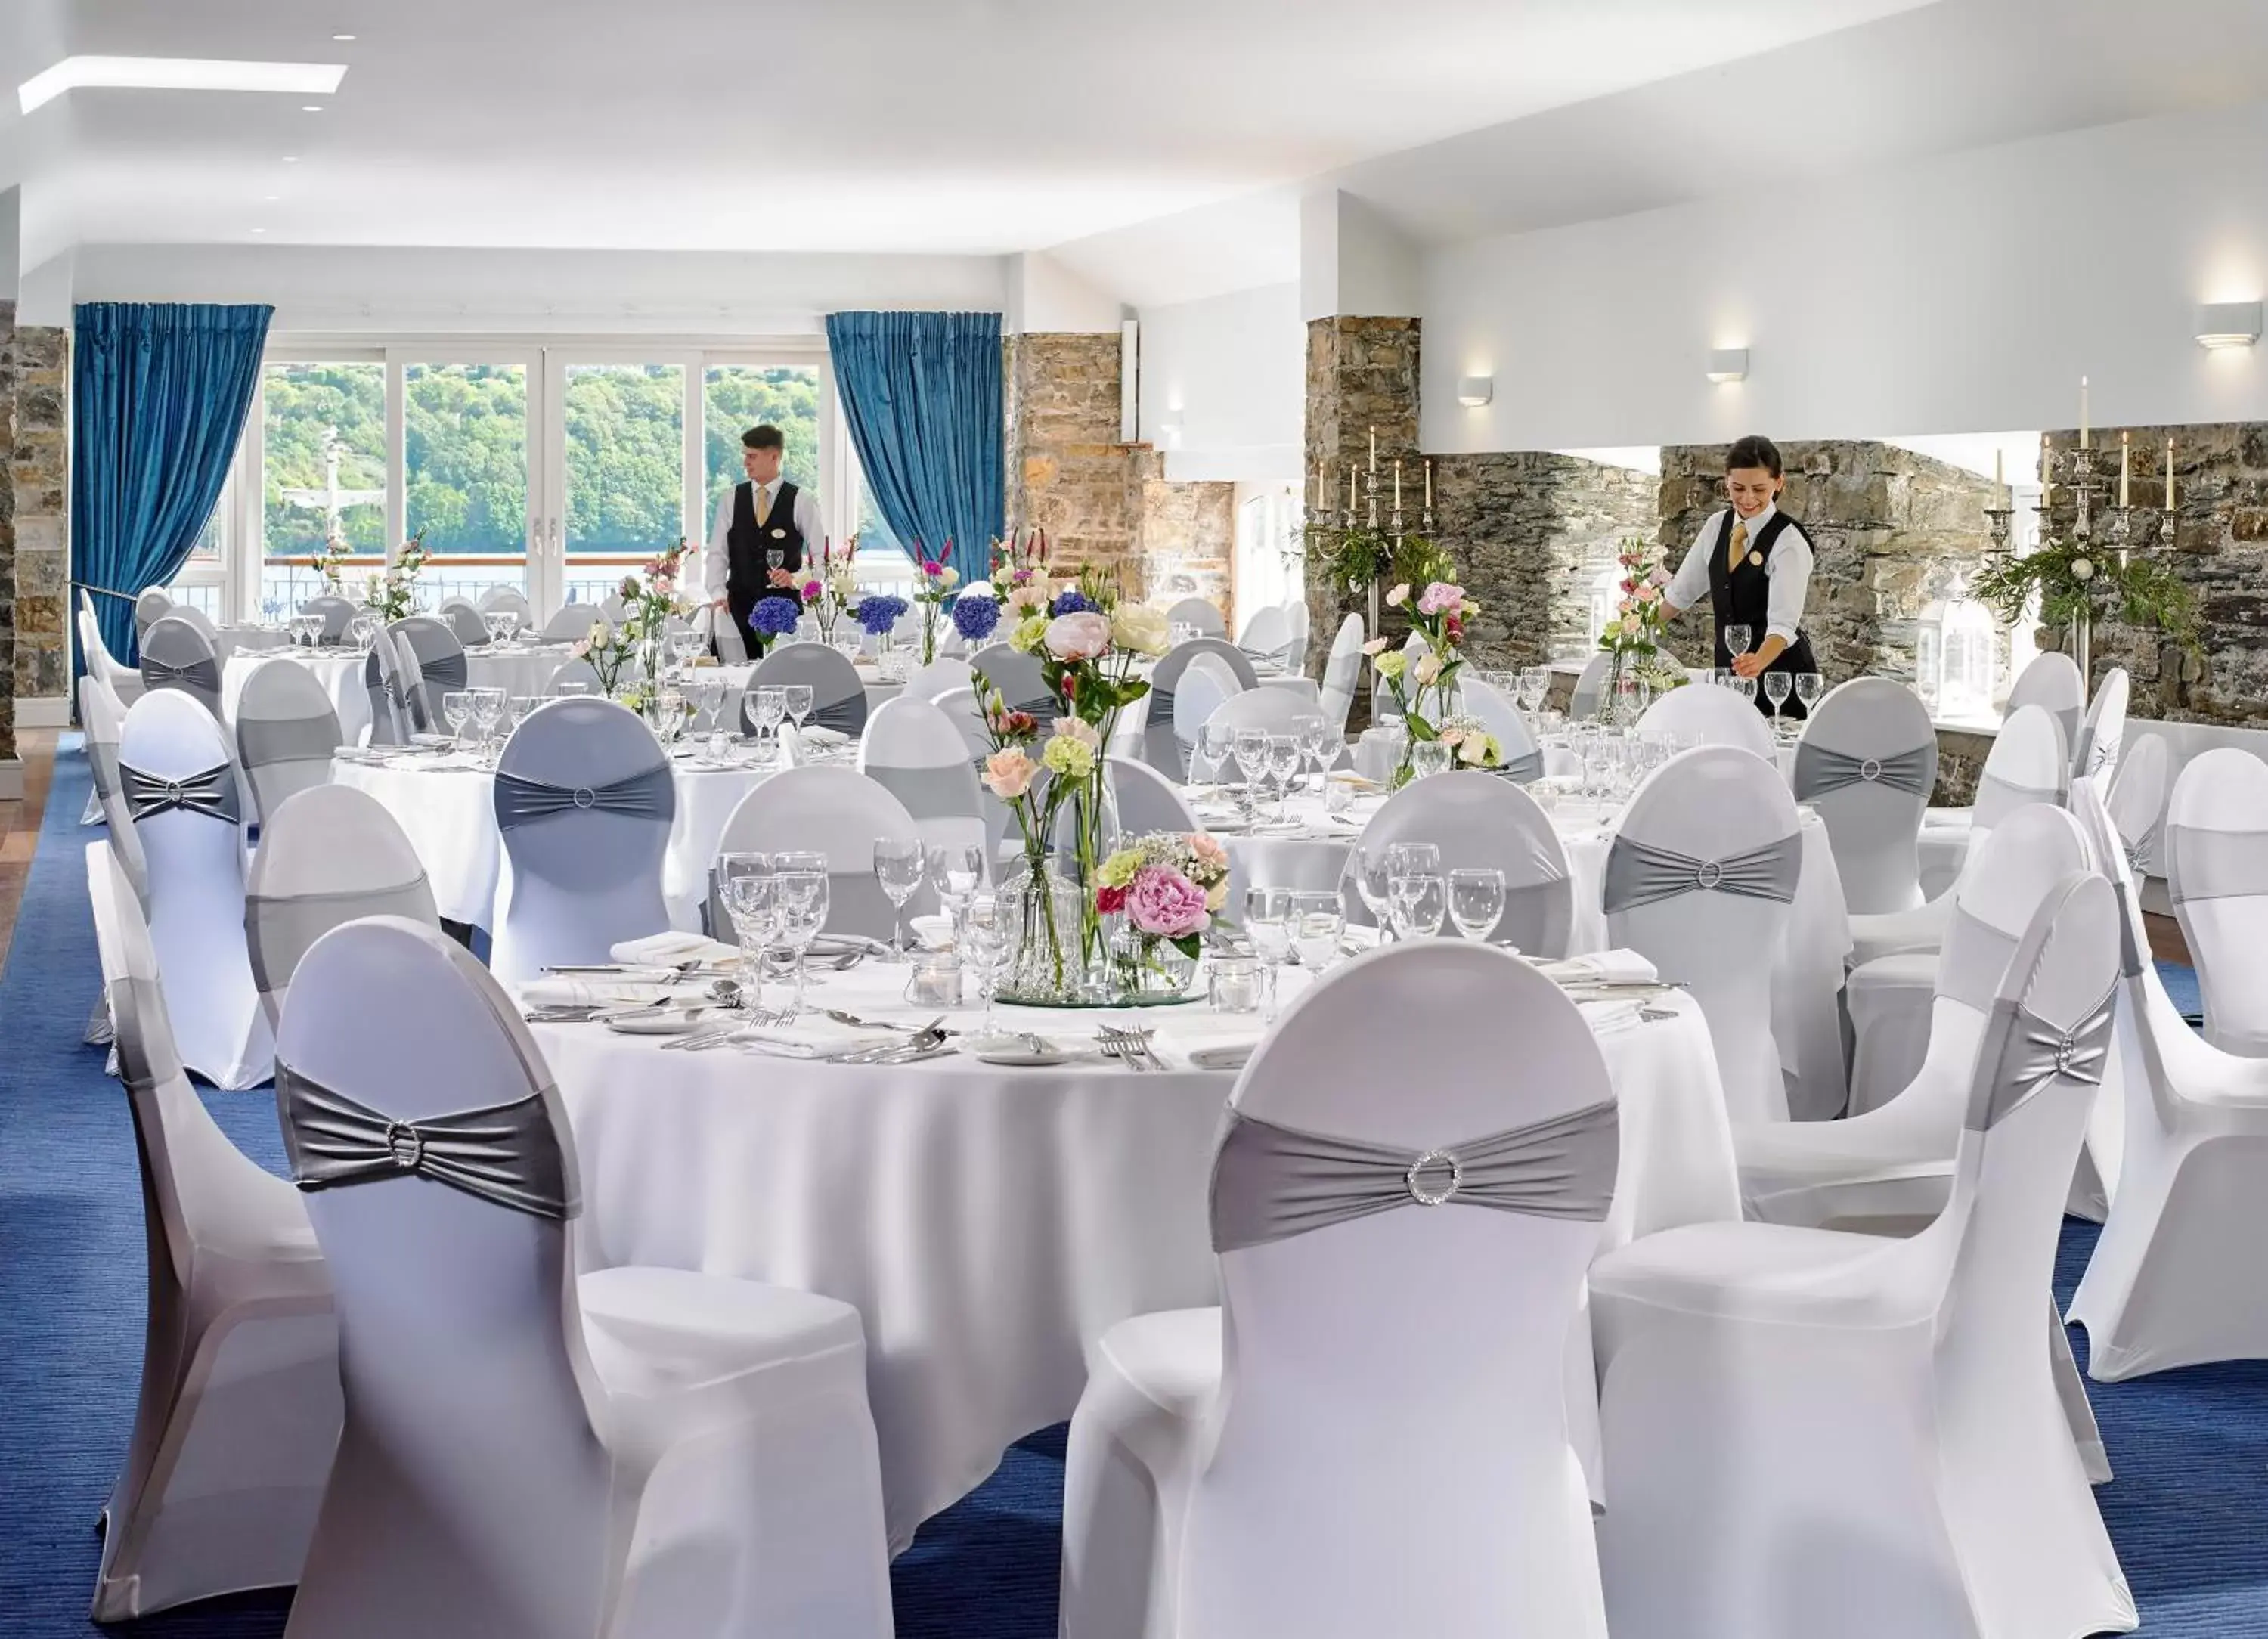 Banquet/Function facilities, Banquet Facilities in Trident Hotel Kinsale